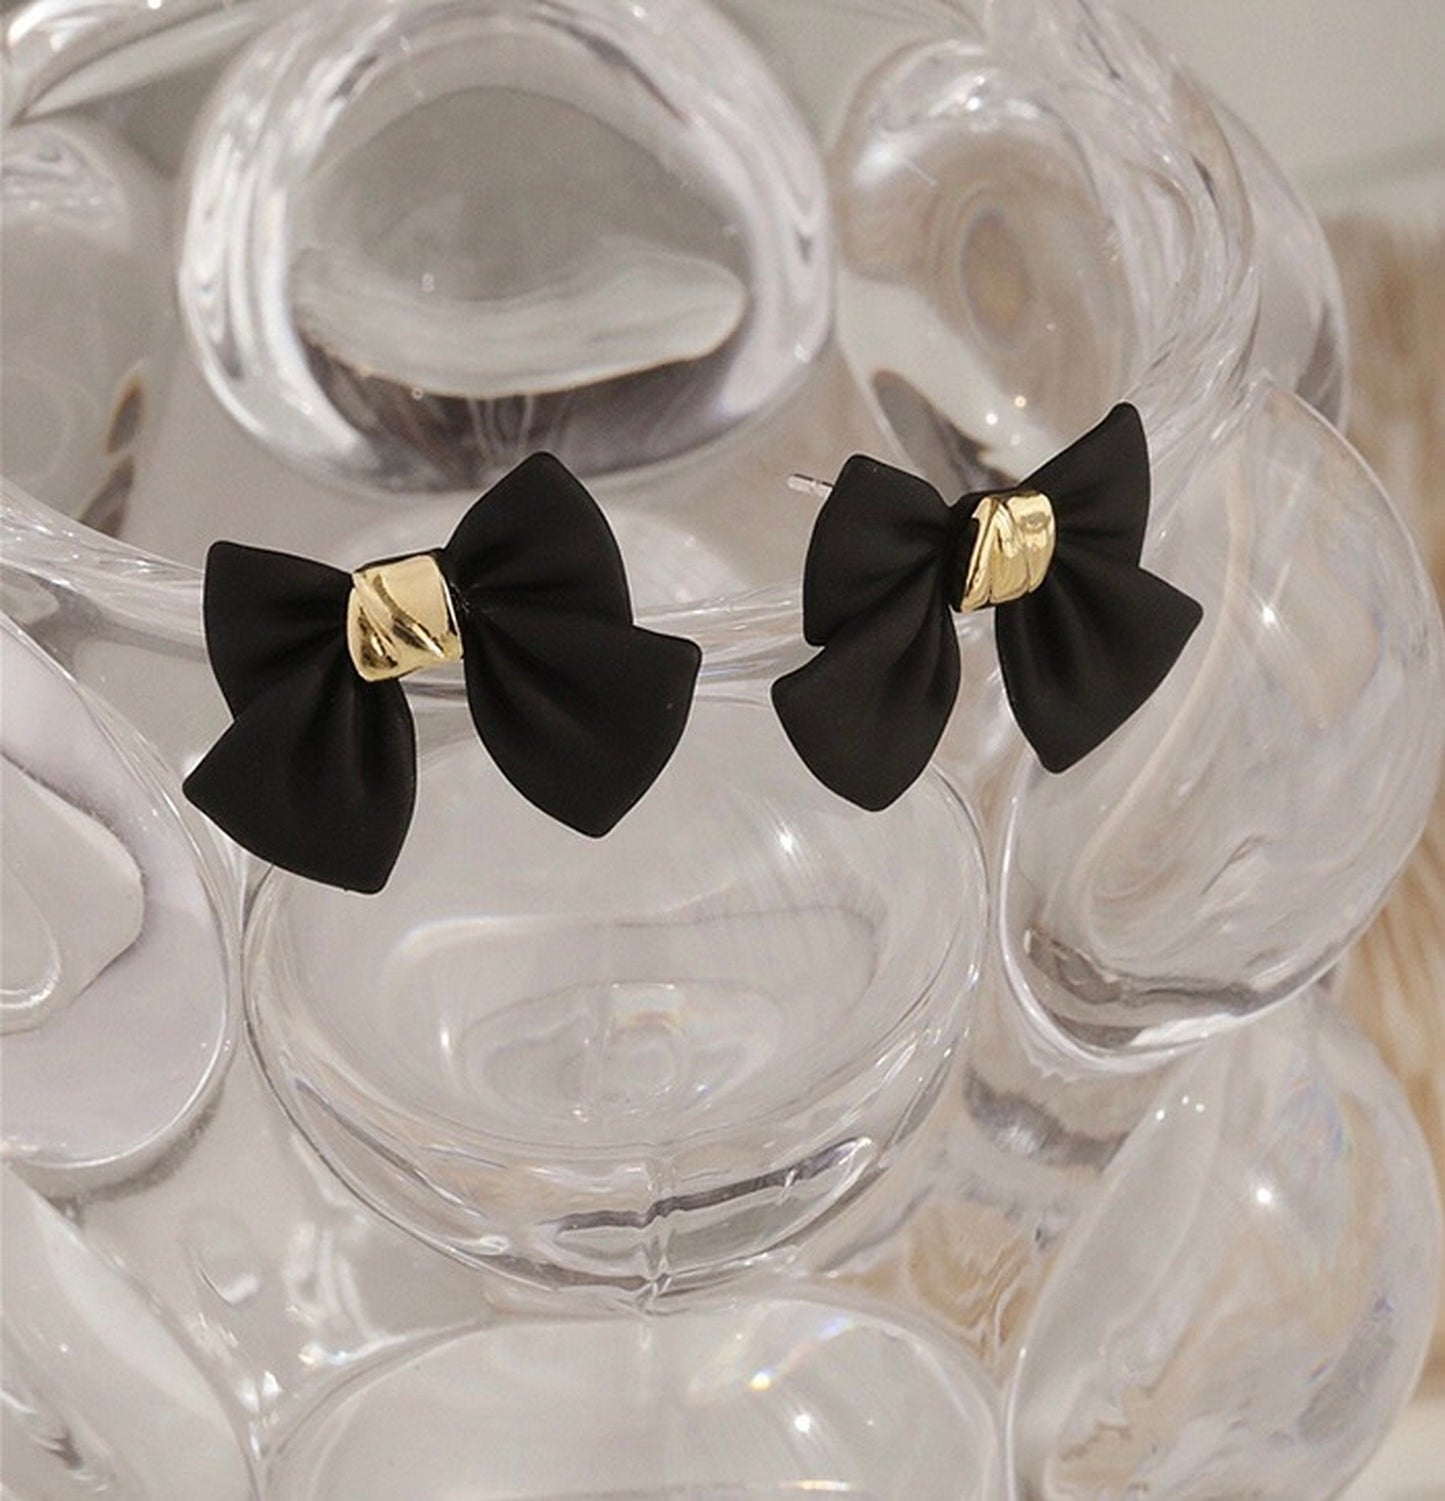 Audrey Hepburn Black Bow Earrings, Black Ribbon Earrings, Bow Stud Earrings, Vintage Style Gothic Black Earrings, Everyday Statement Jewelry